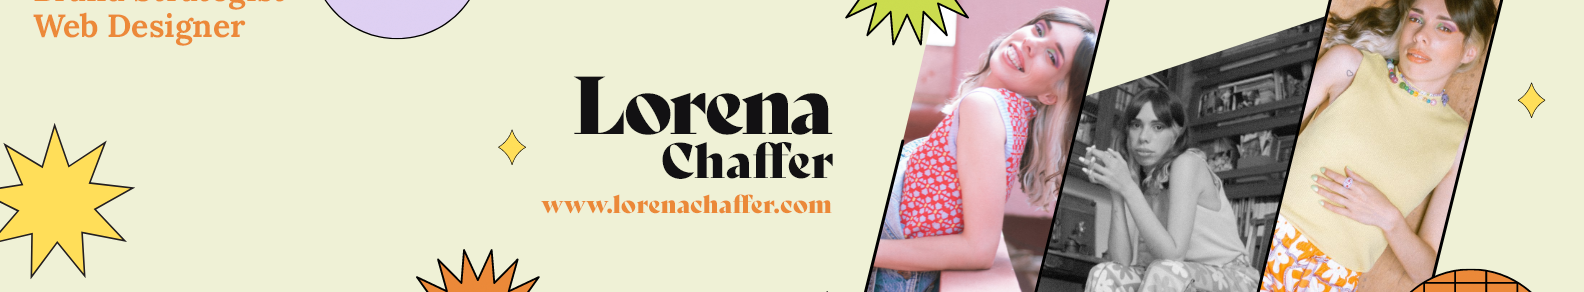 Lorena Chaffer's profile banner